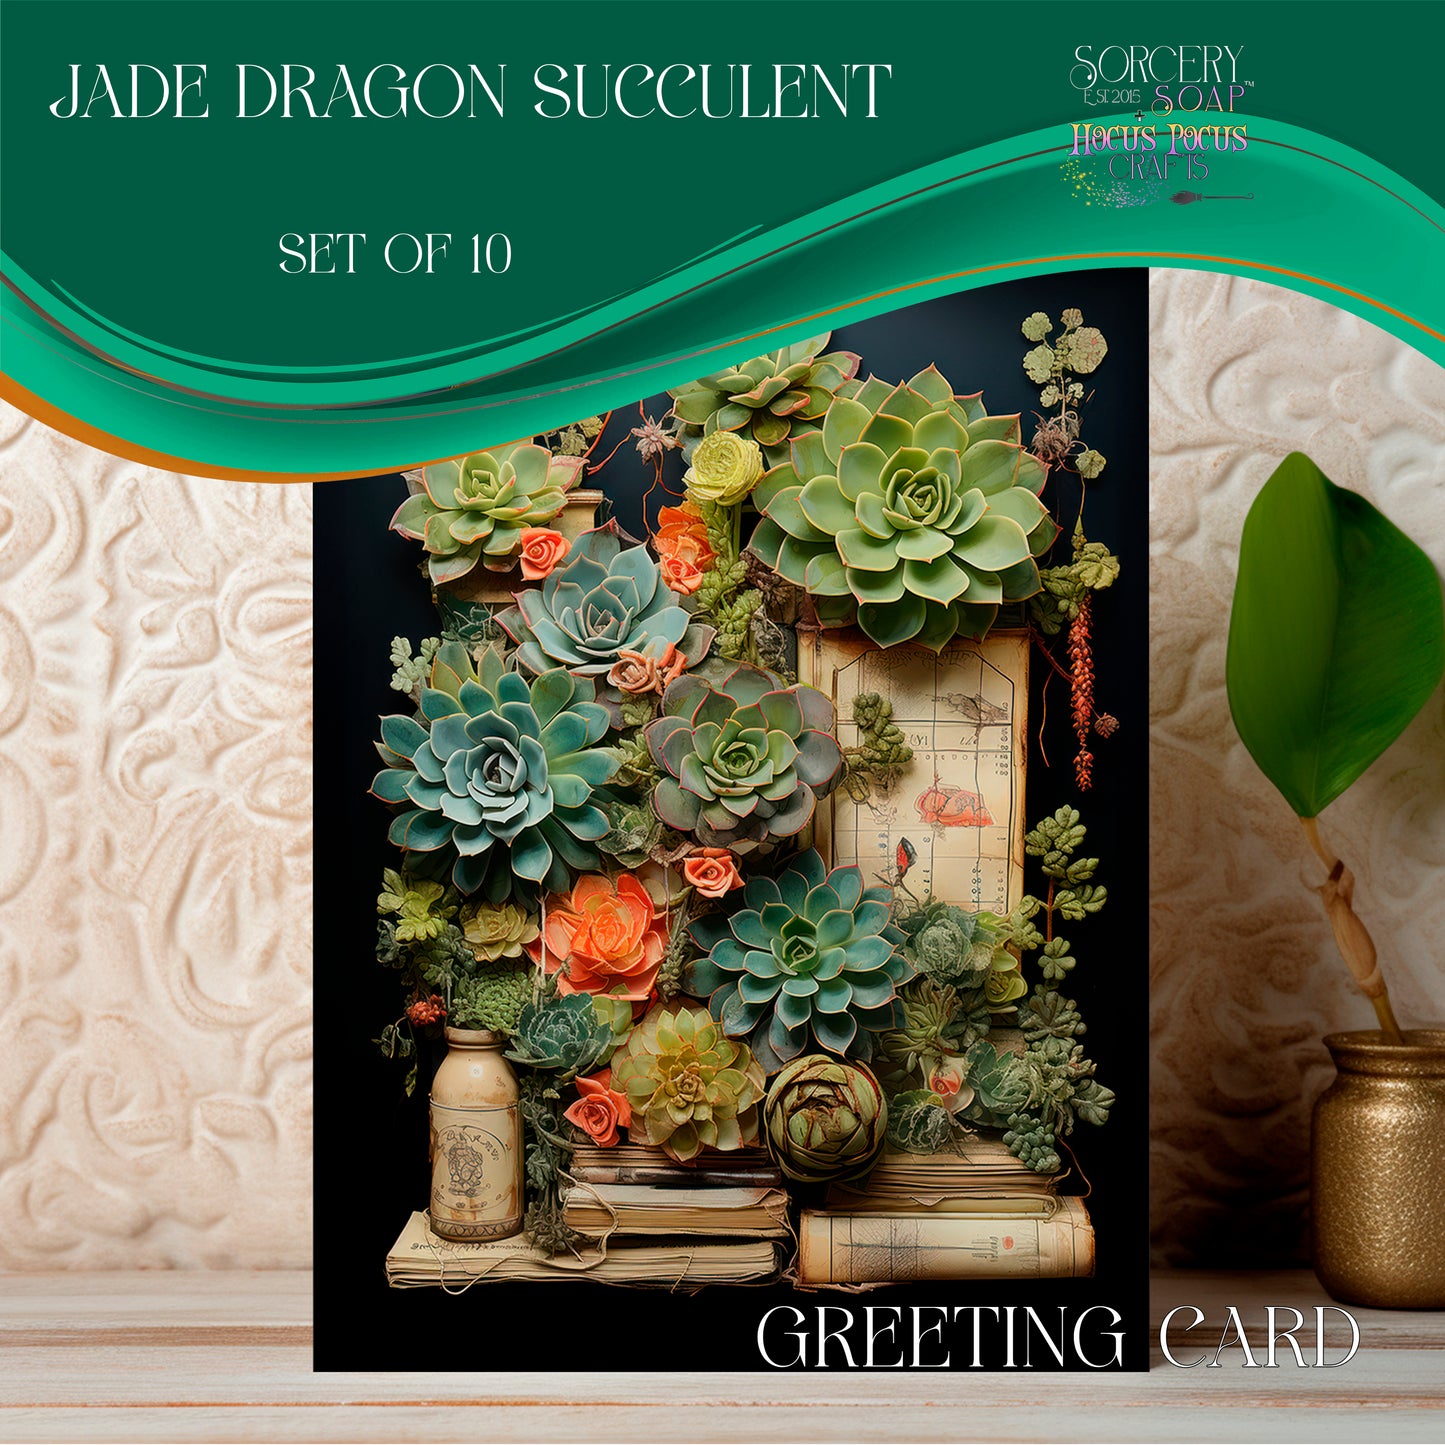 Jade Dragon Succulent : Greeting Cards